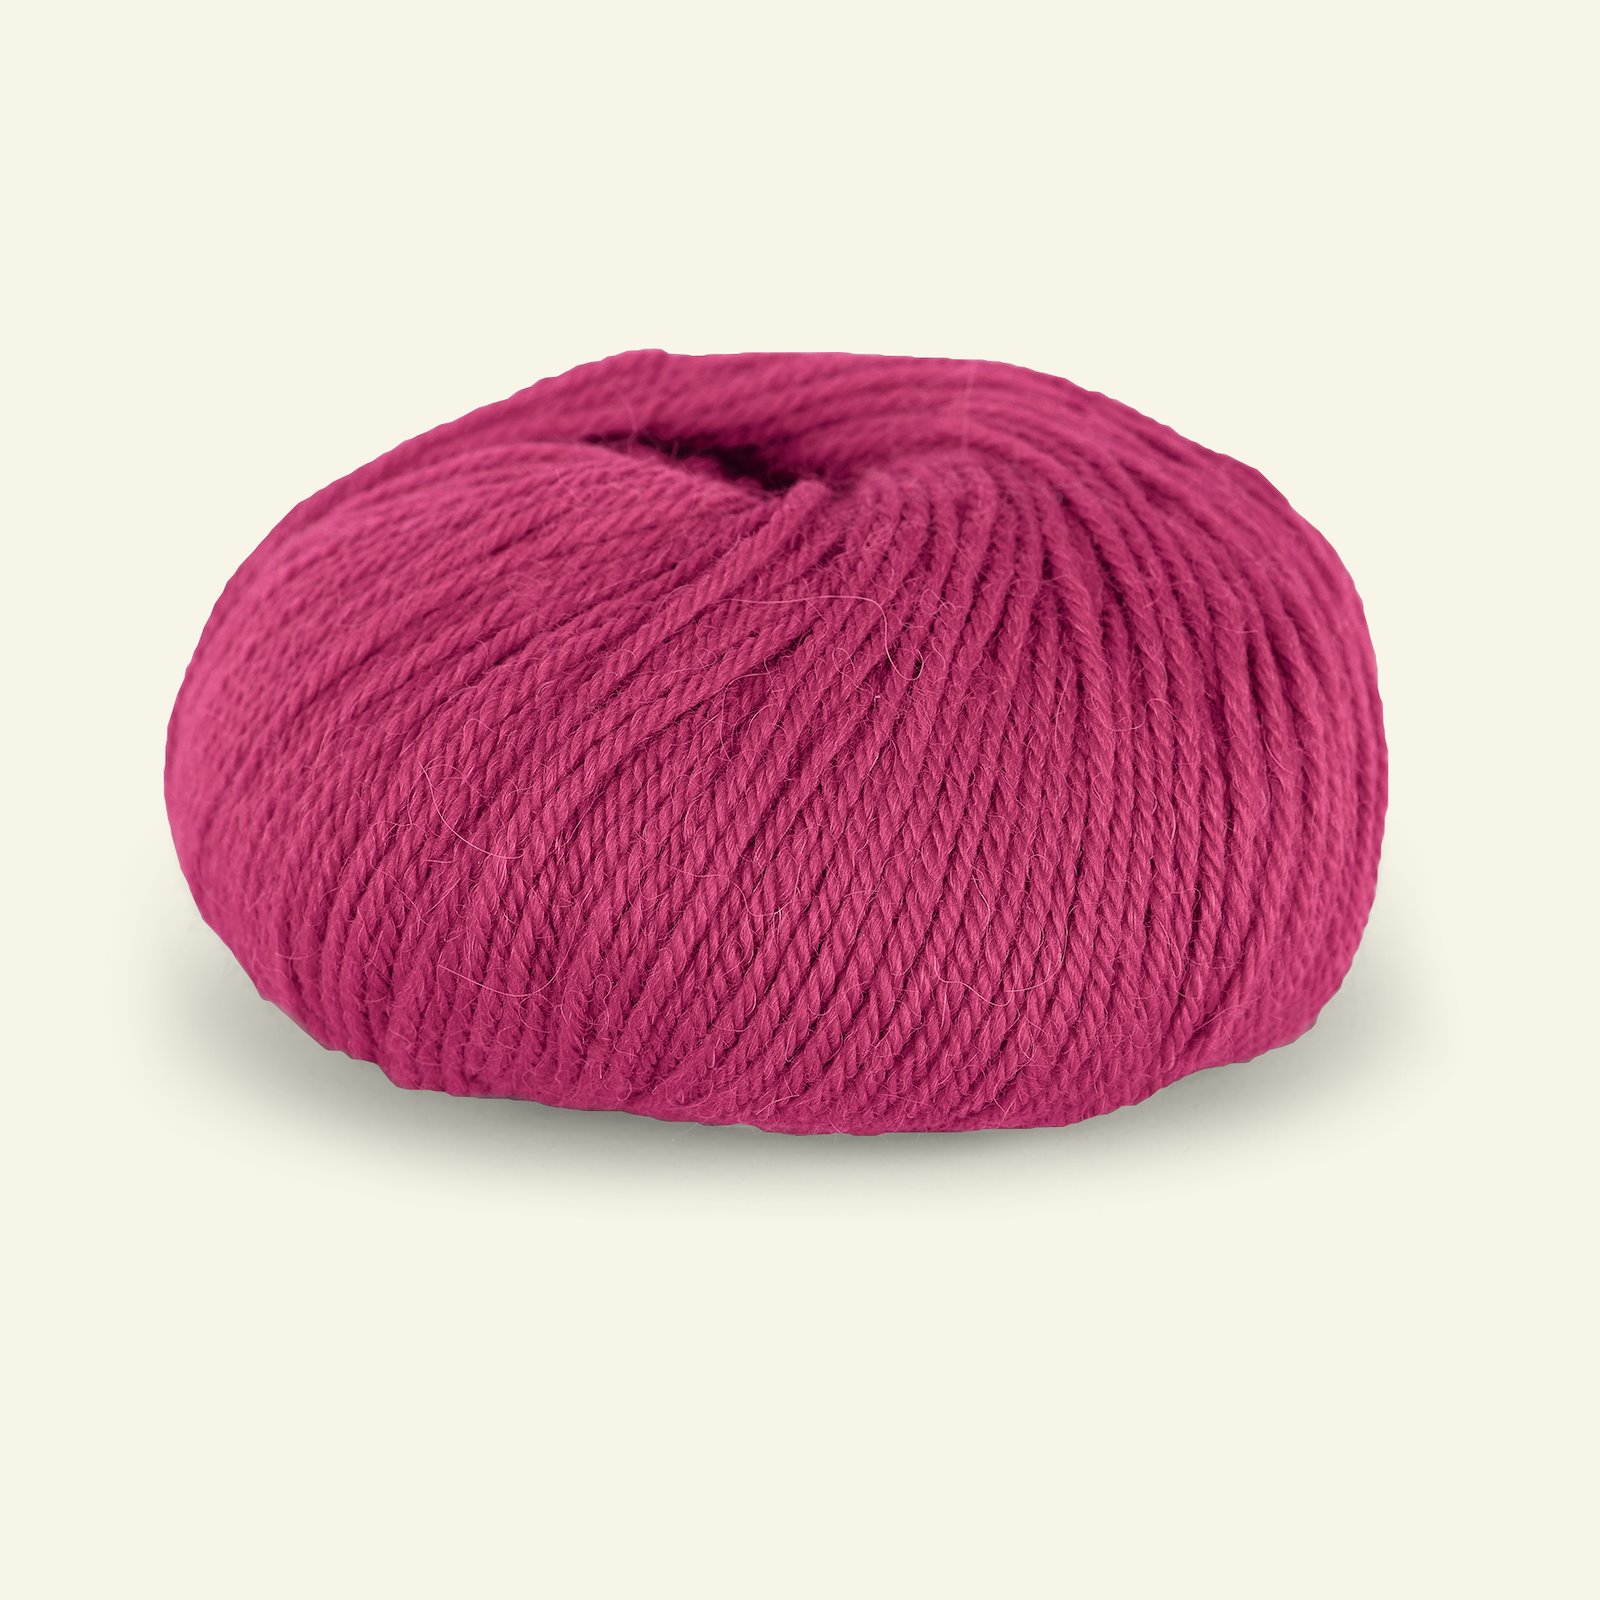 Du Store Alpakka, alpaca merino mixed yarn "Sterk", pink (825) 90000666_pack_b